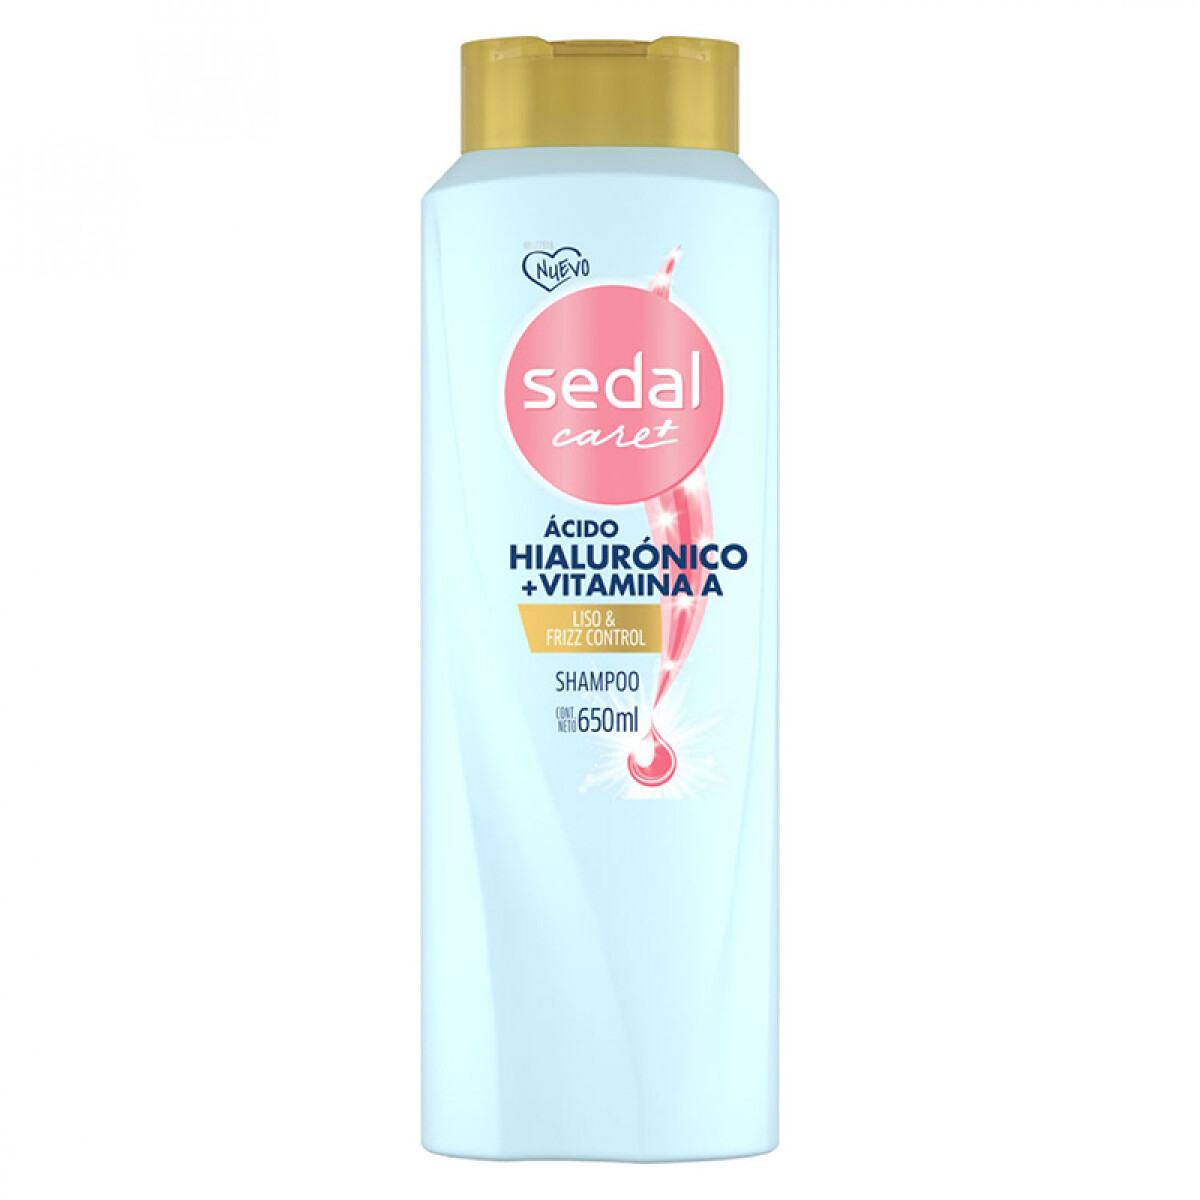 Sedal shampoo 650 ml - Ácido hialurónico 